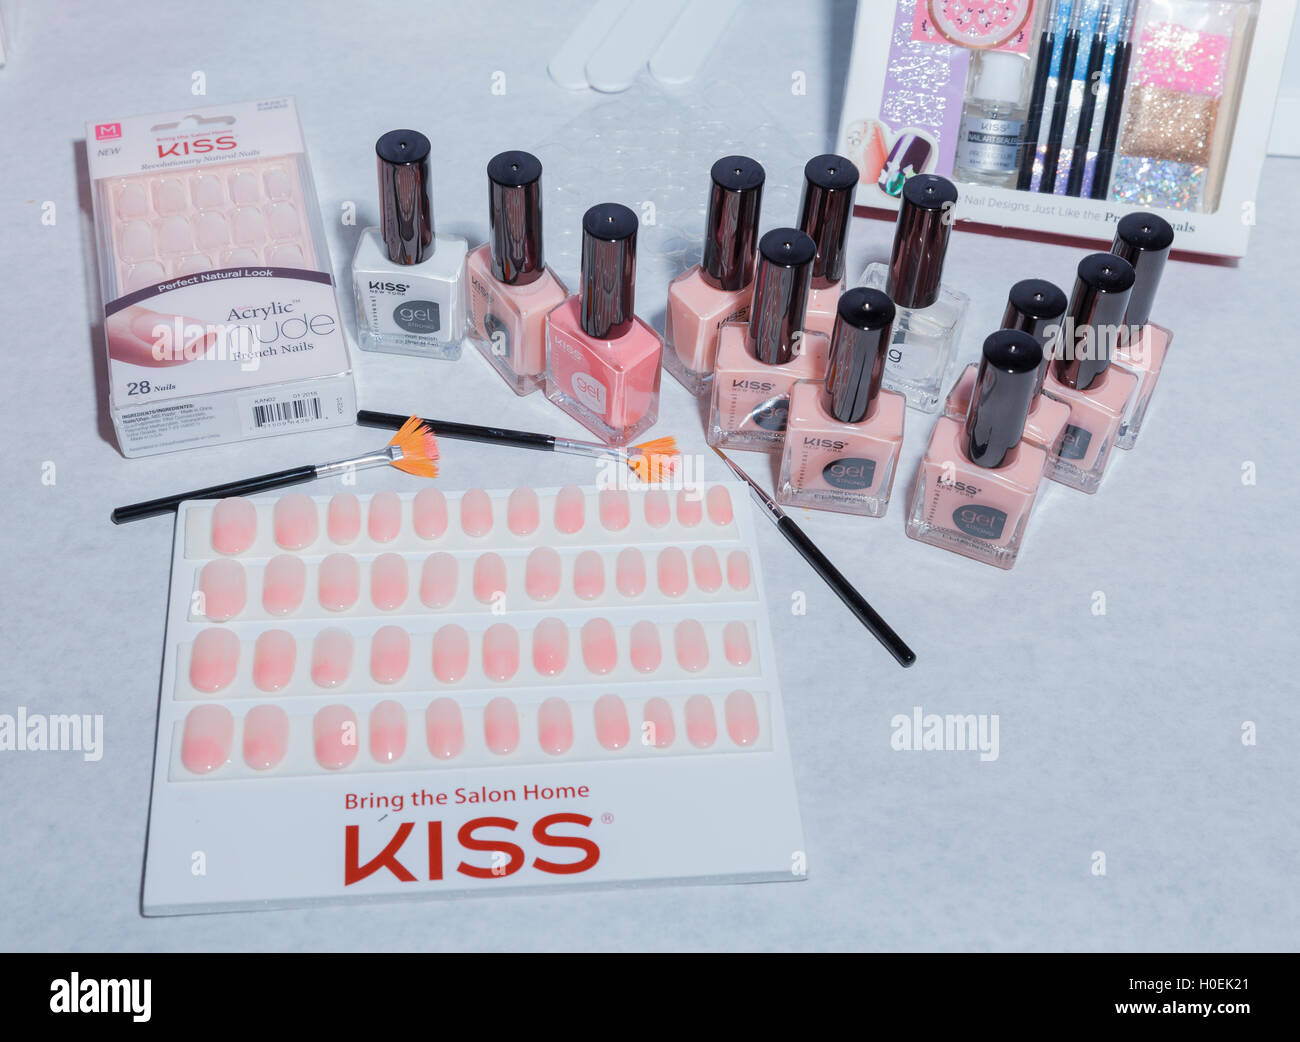 2. KISS Salon Secrets Nail Art Starter Kit - wide 4